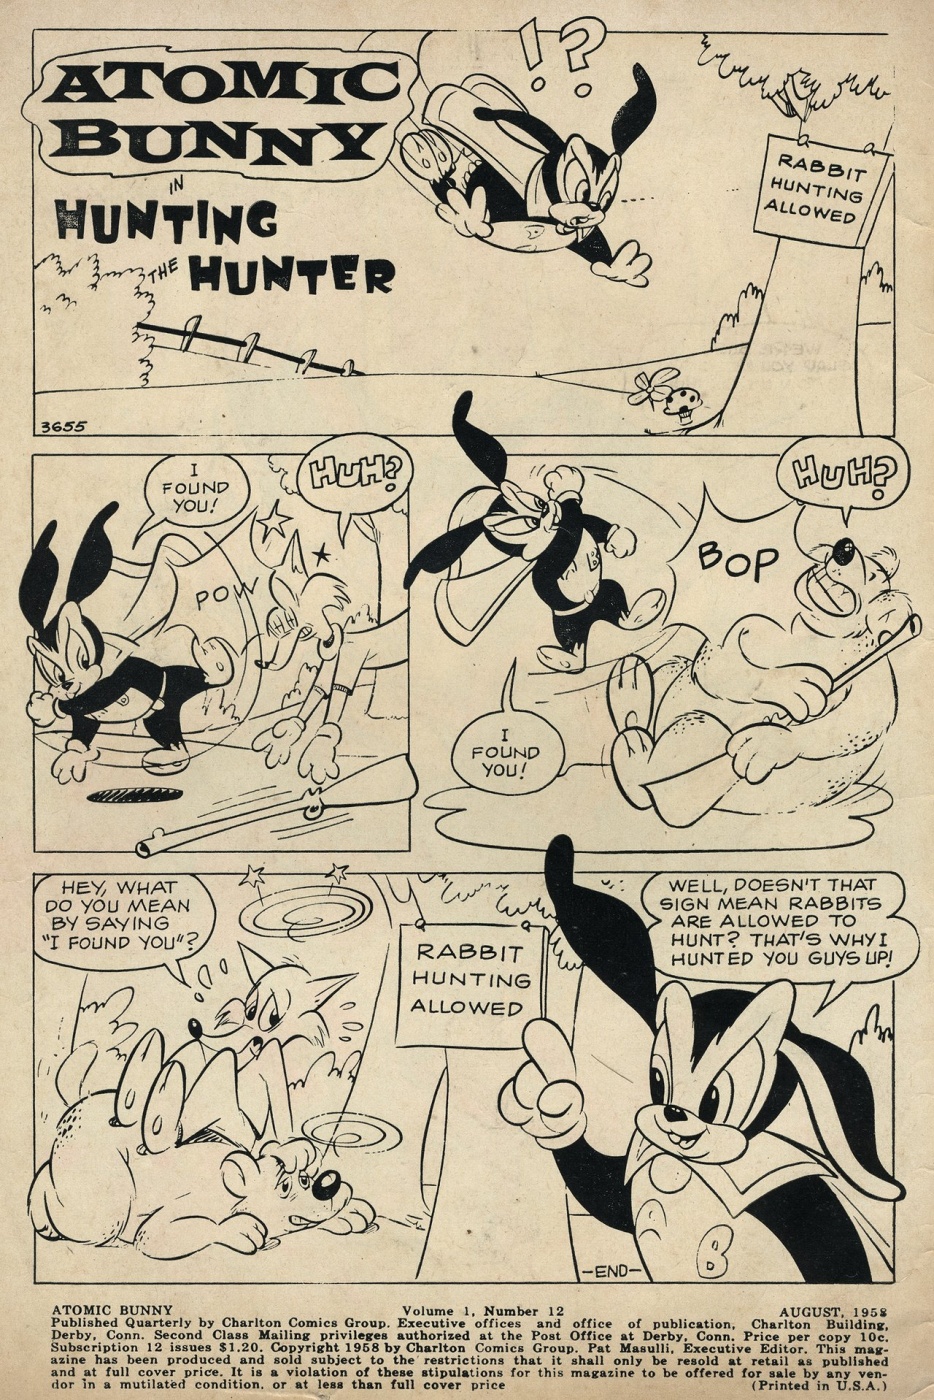 Atomic-Bunny-Comic-Strips (2)